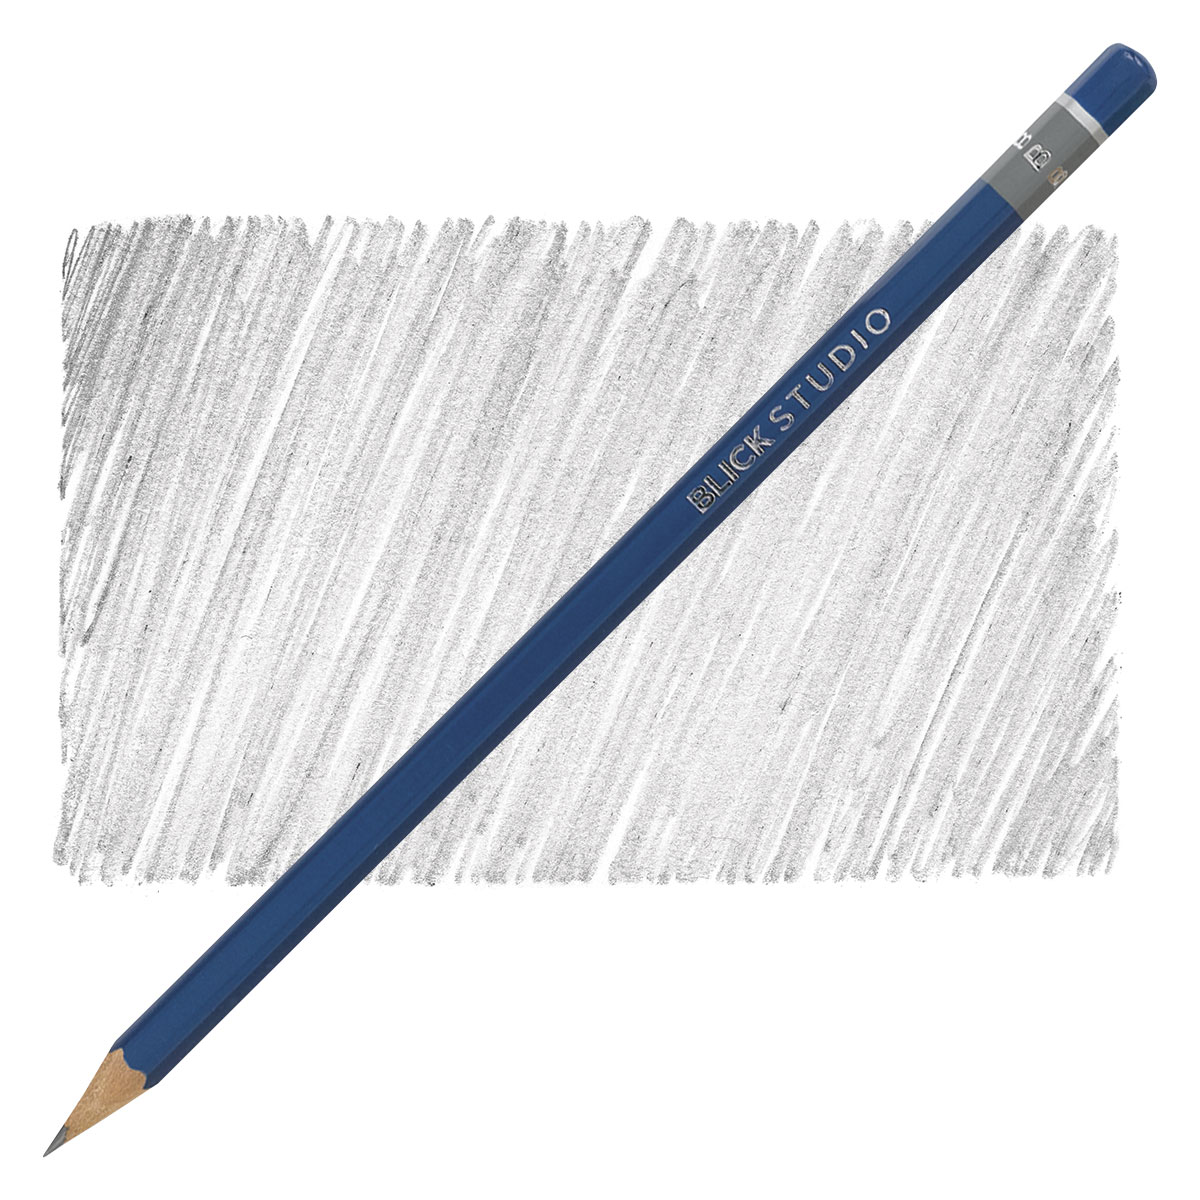 Blick Studio Drawing Pencil - B